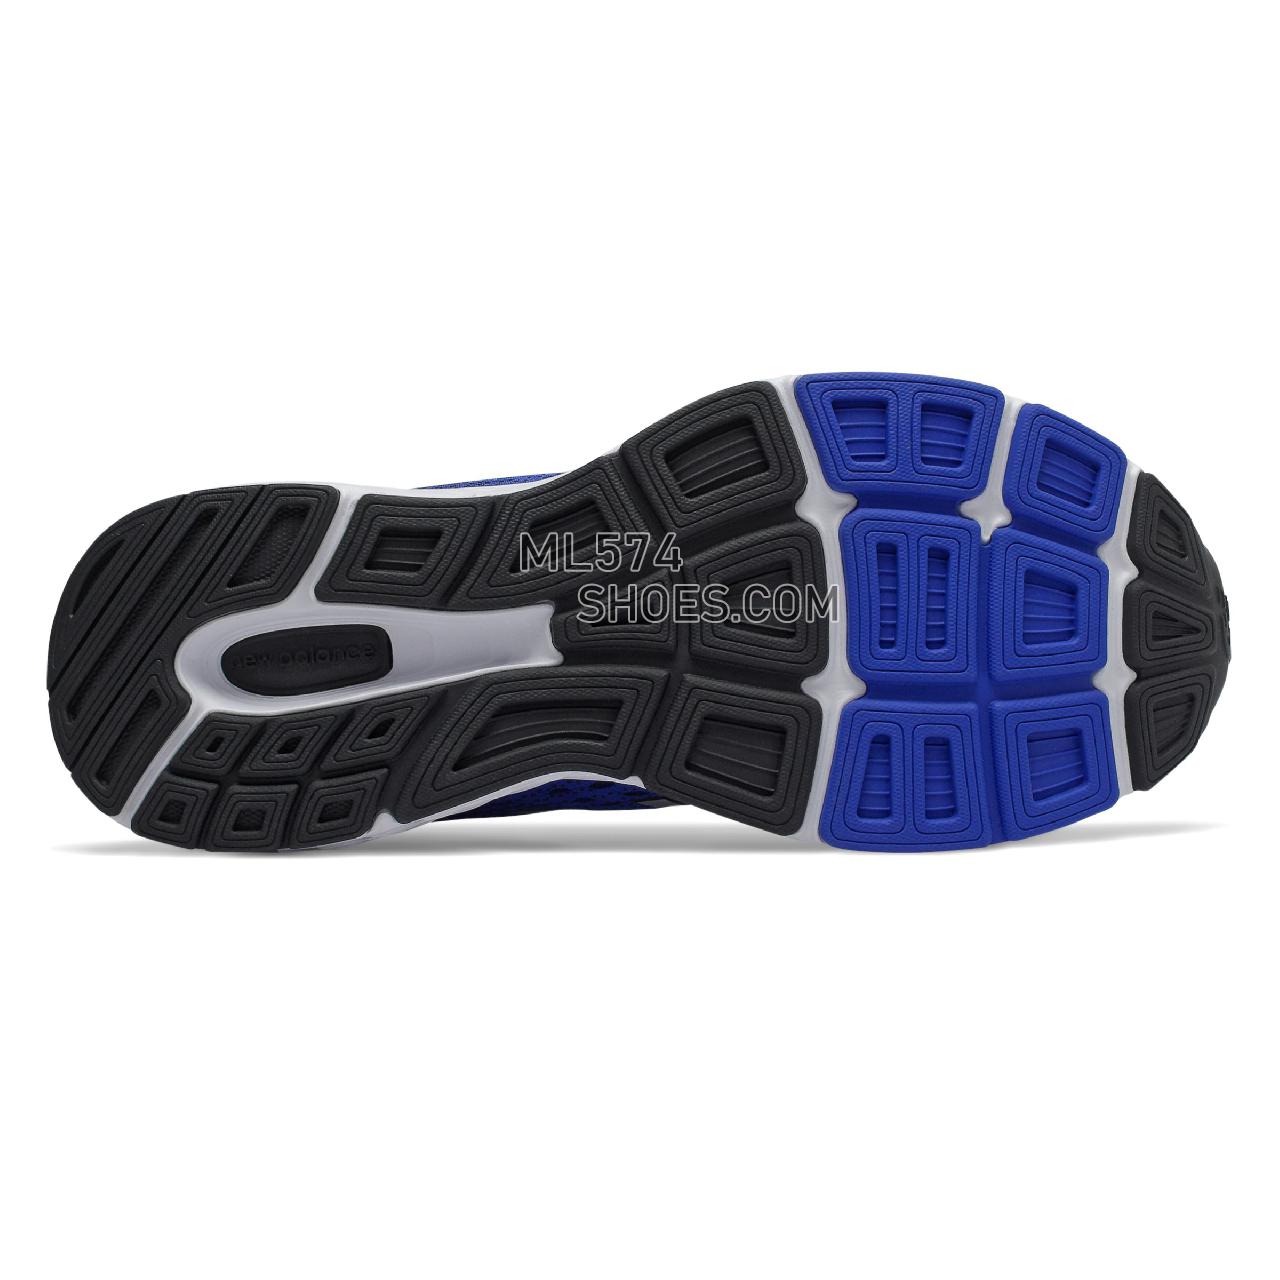 New Balance 680v6 - Men's Classic Sneakers - Uv Blue with Black - M680LB6